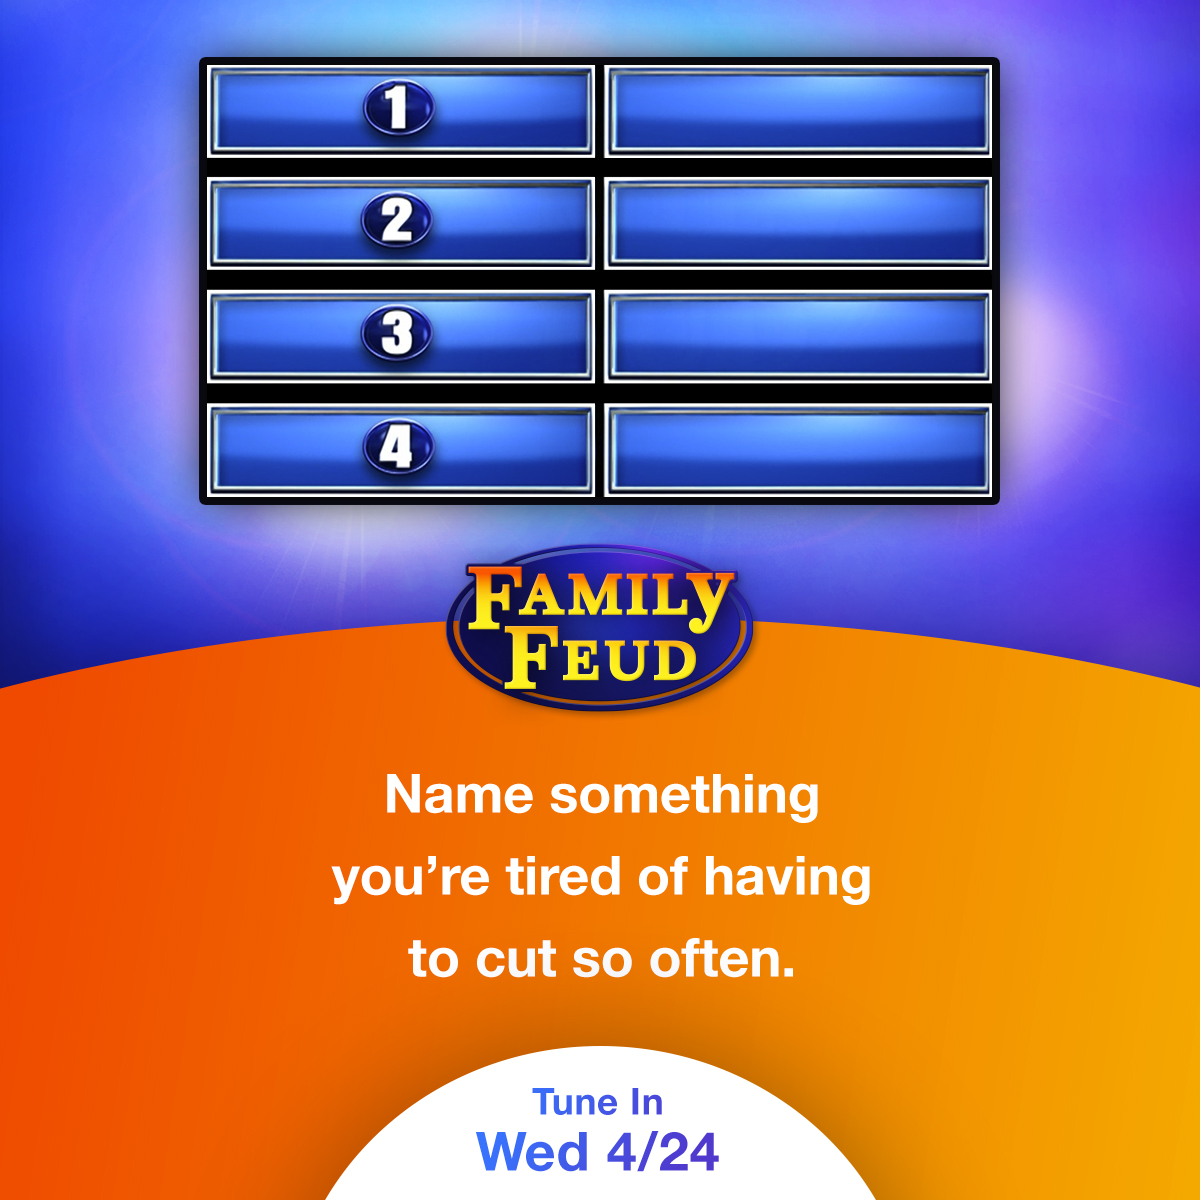 Tell us your best answer! Watch #FamilyFeud TONIGHT 6 - 8 on Atlanta69!